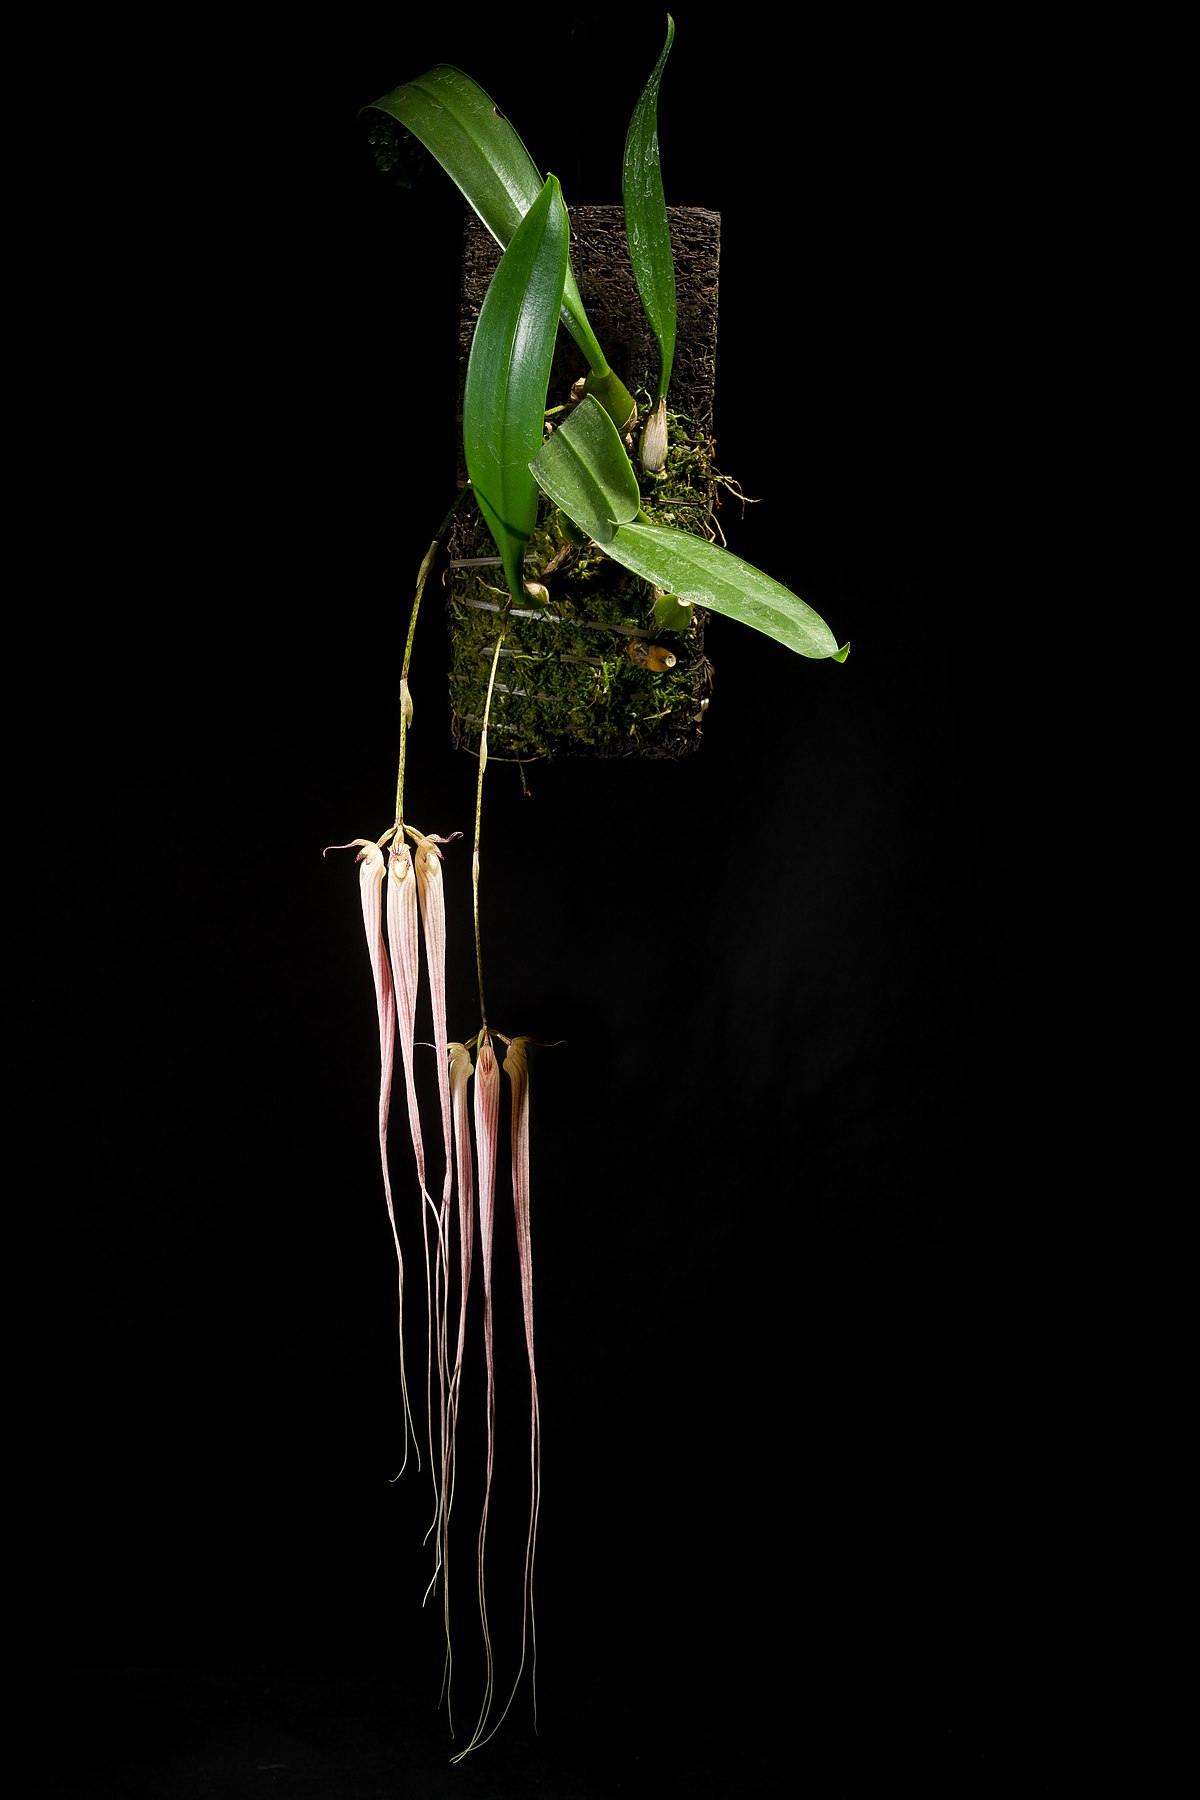 File:Bulbophyllum longissimum 'Fujio' SM JOGA (Ridl.) J.J.Sm., Bull. Jard.  Bot. Buitenzorg, sér. 2, 8 25 (1912) (49269262007).jpg - Wikipedia